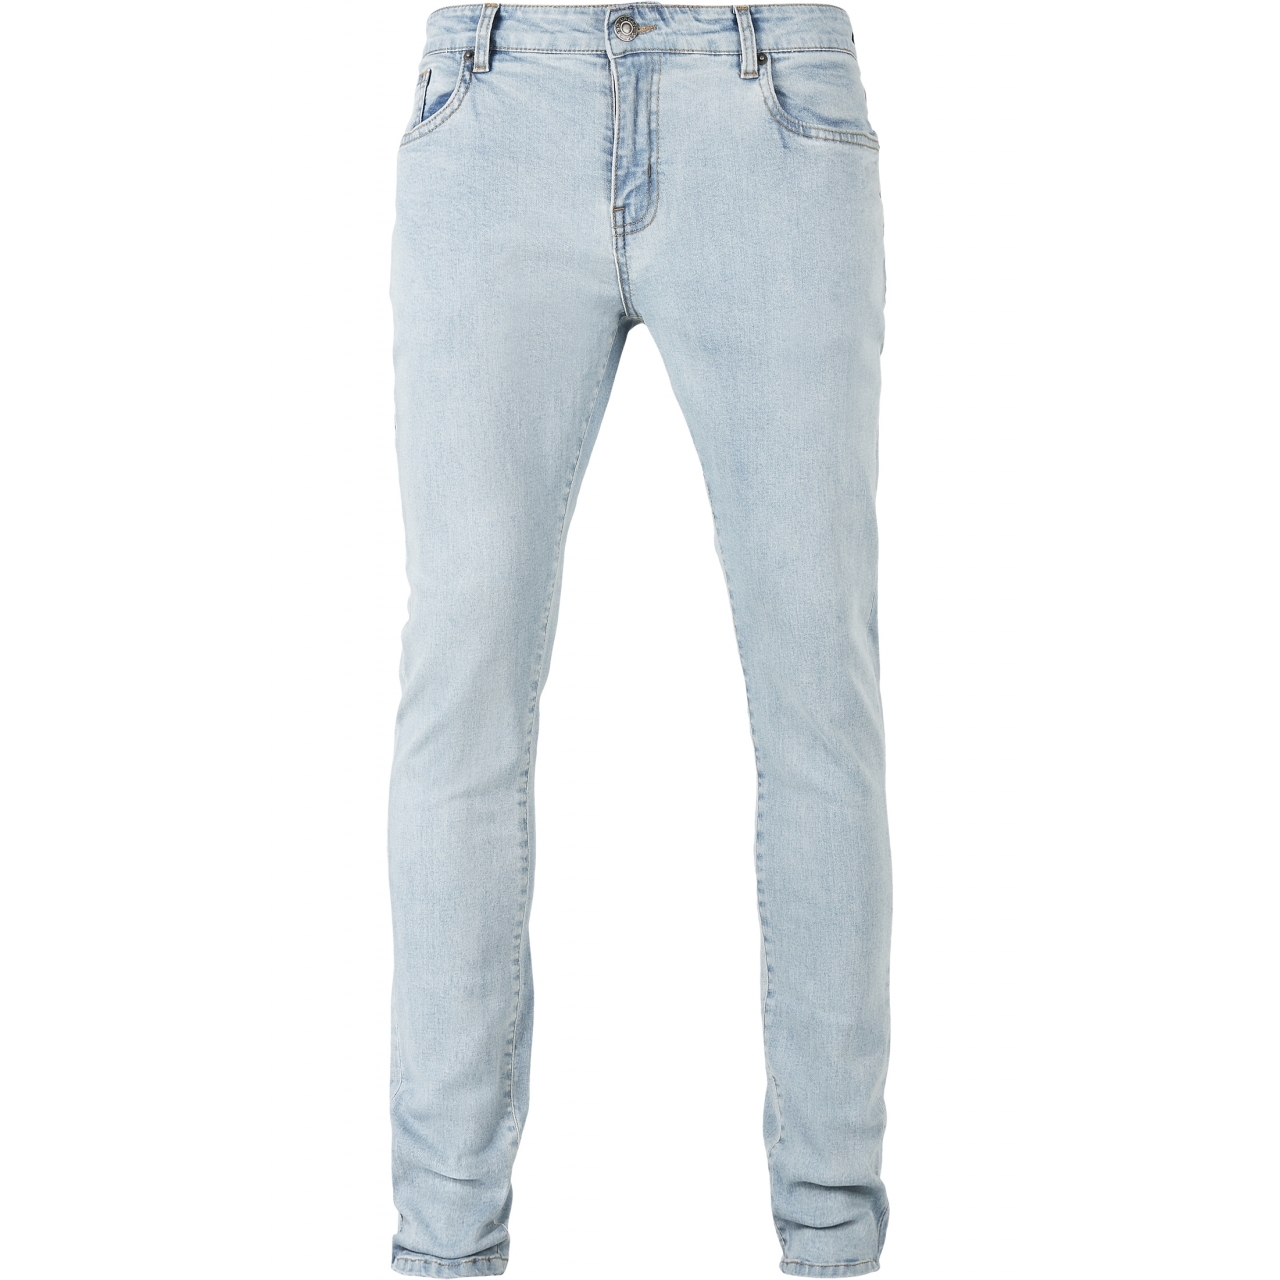 Džíny Urban Classics Slim Fit Zip Jeans - modré, 29/32